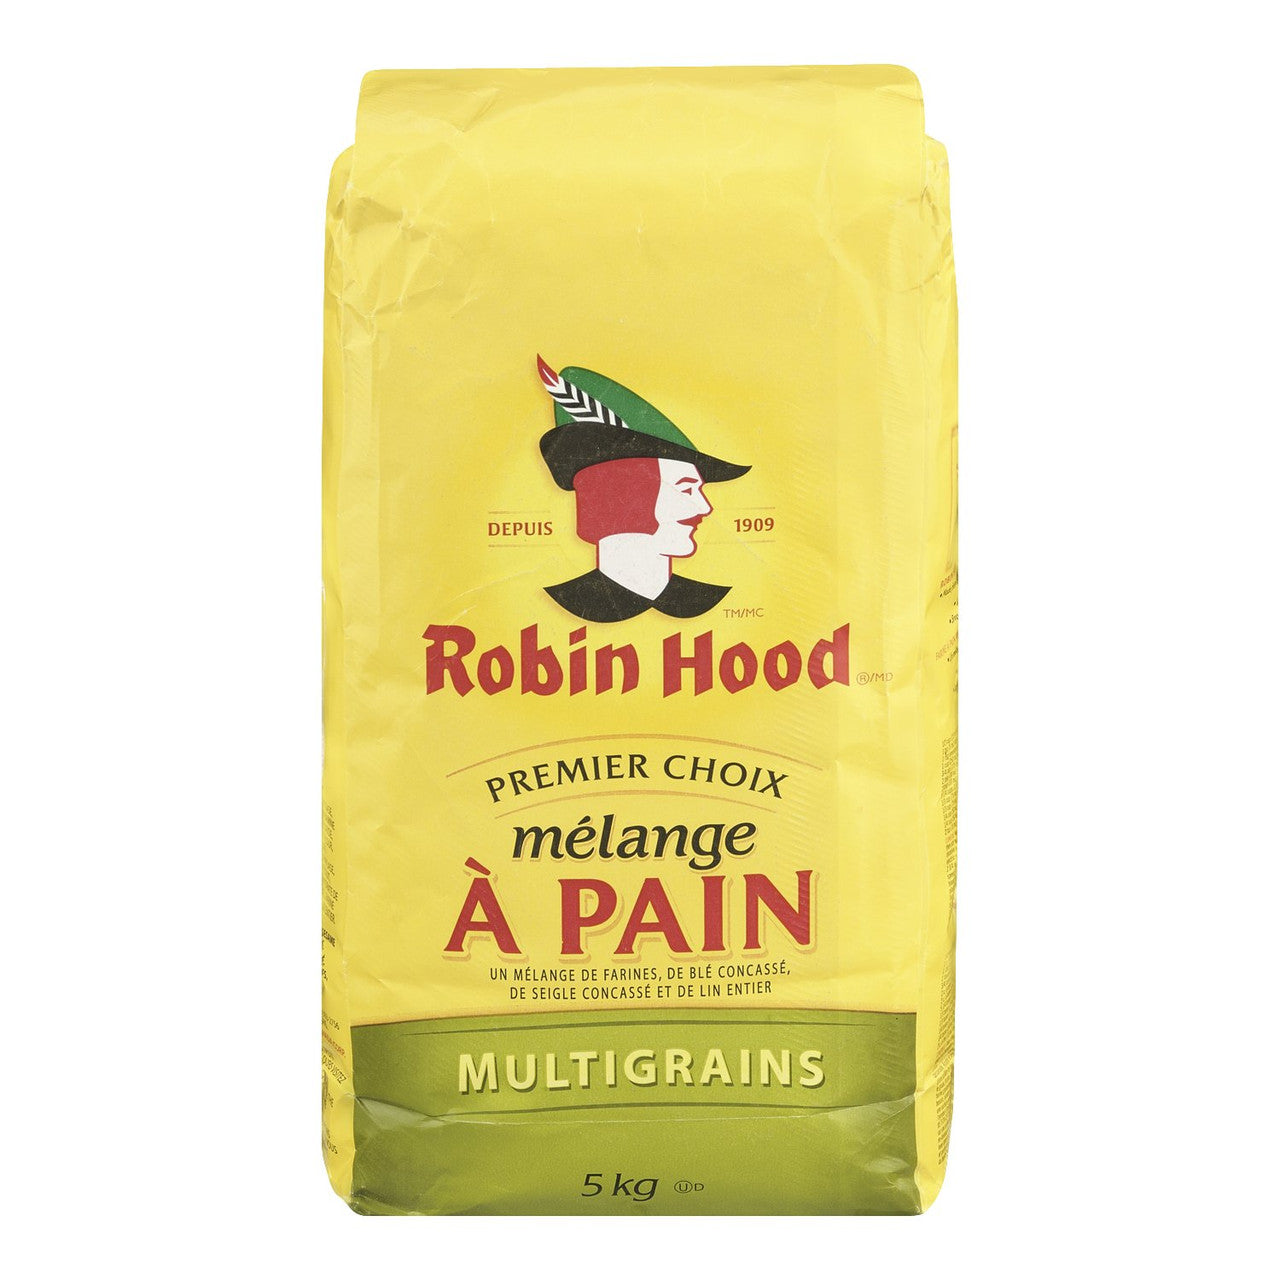 Robin Hood Multigrain Bread Flour 5kg/11 lbs. Bag, {Imported from Canada}